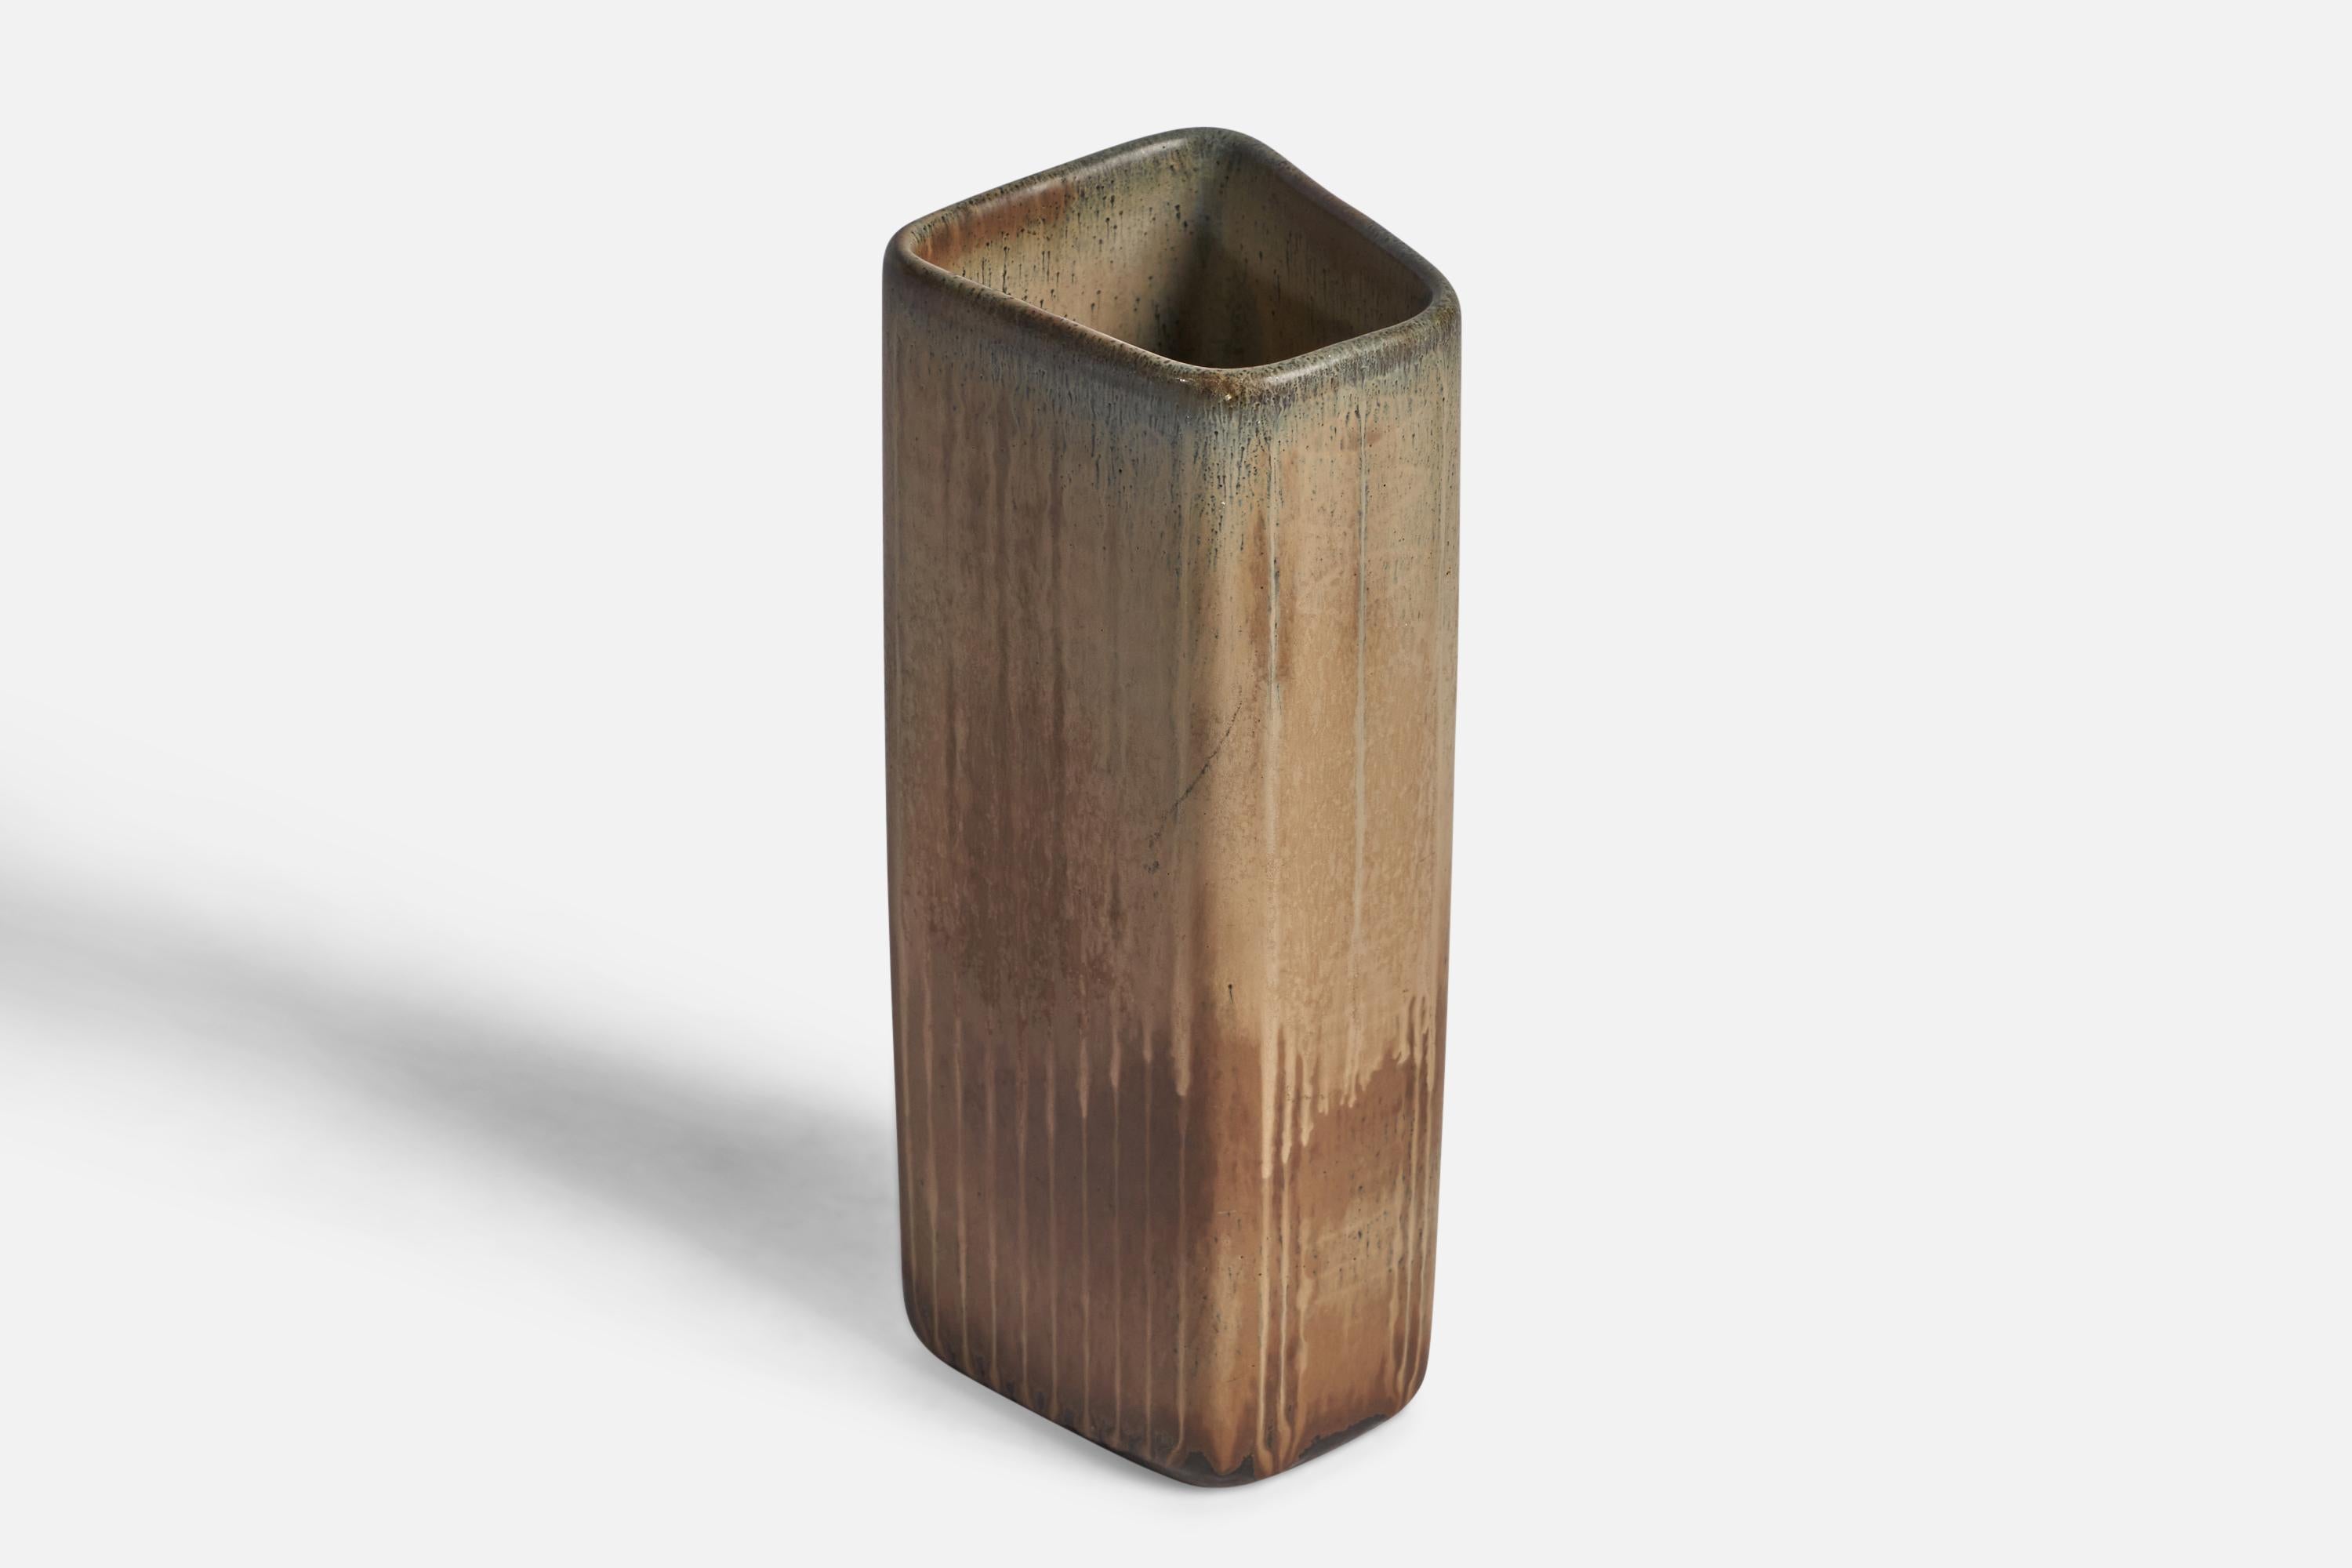 A grey and brown-glazed stoneware vase designed by Gunnar Nylund, Sweden, 1940s.
“GN SWEDEN” stamp on bottom